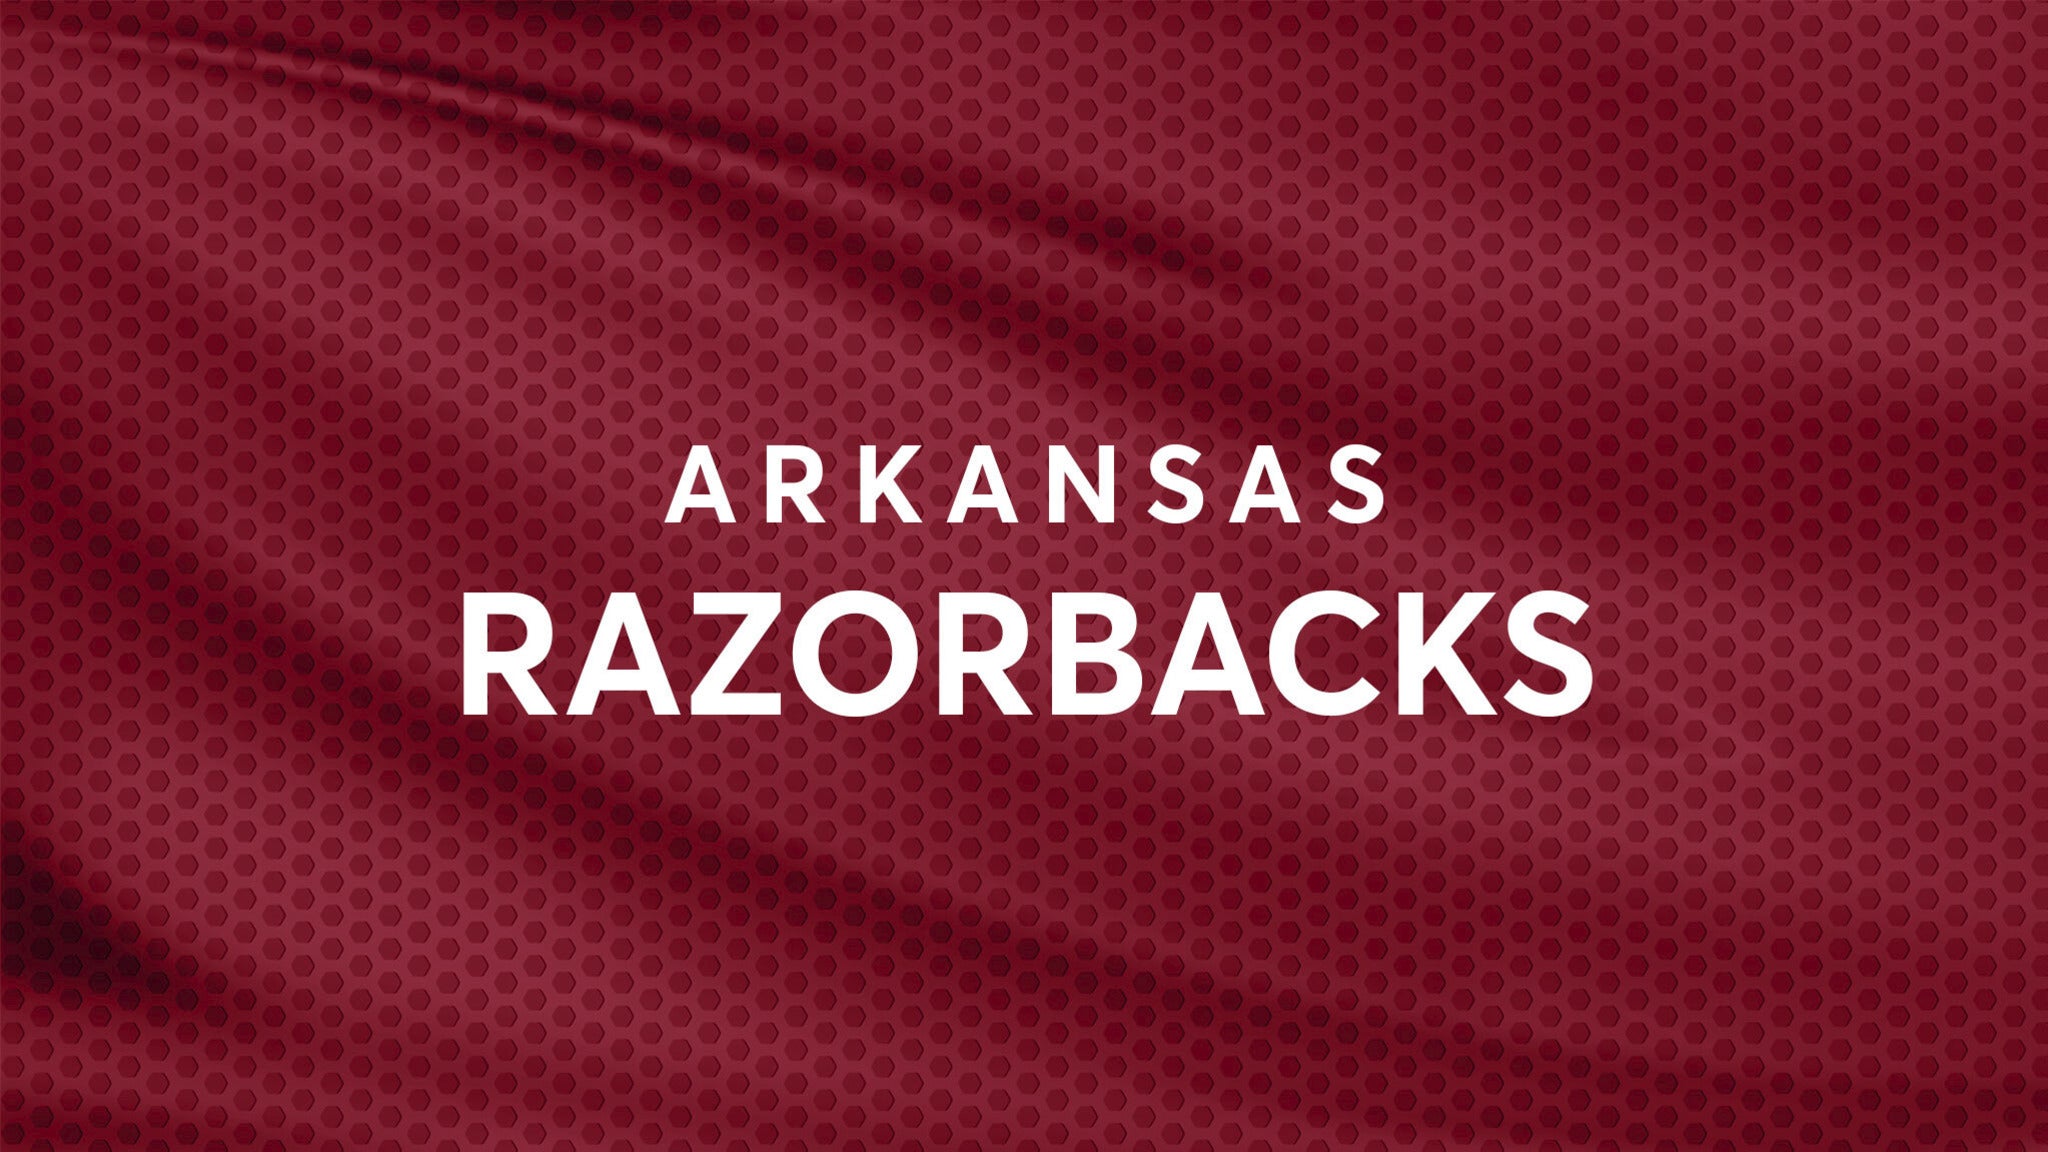 Arkansas Razorbacks Baseball vs. Tennessee Vols Baseball